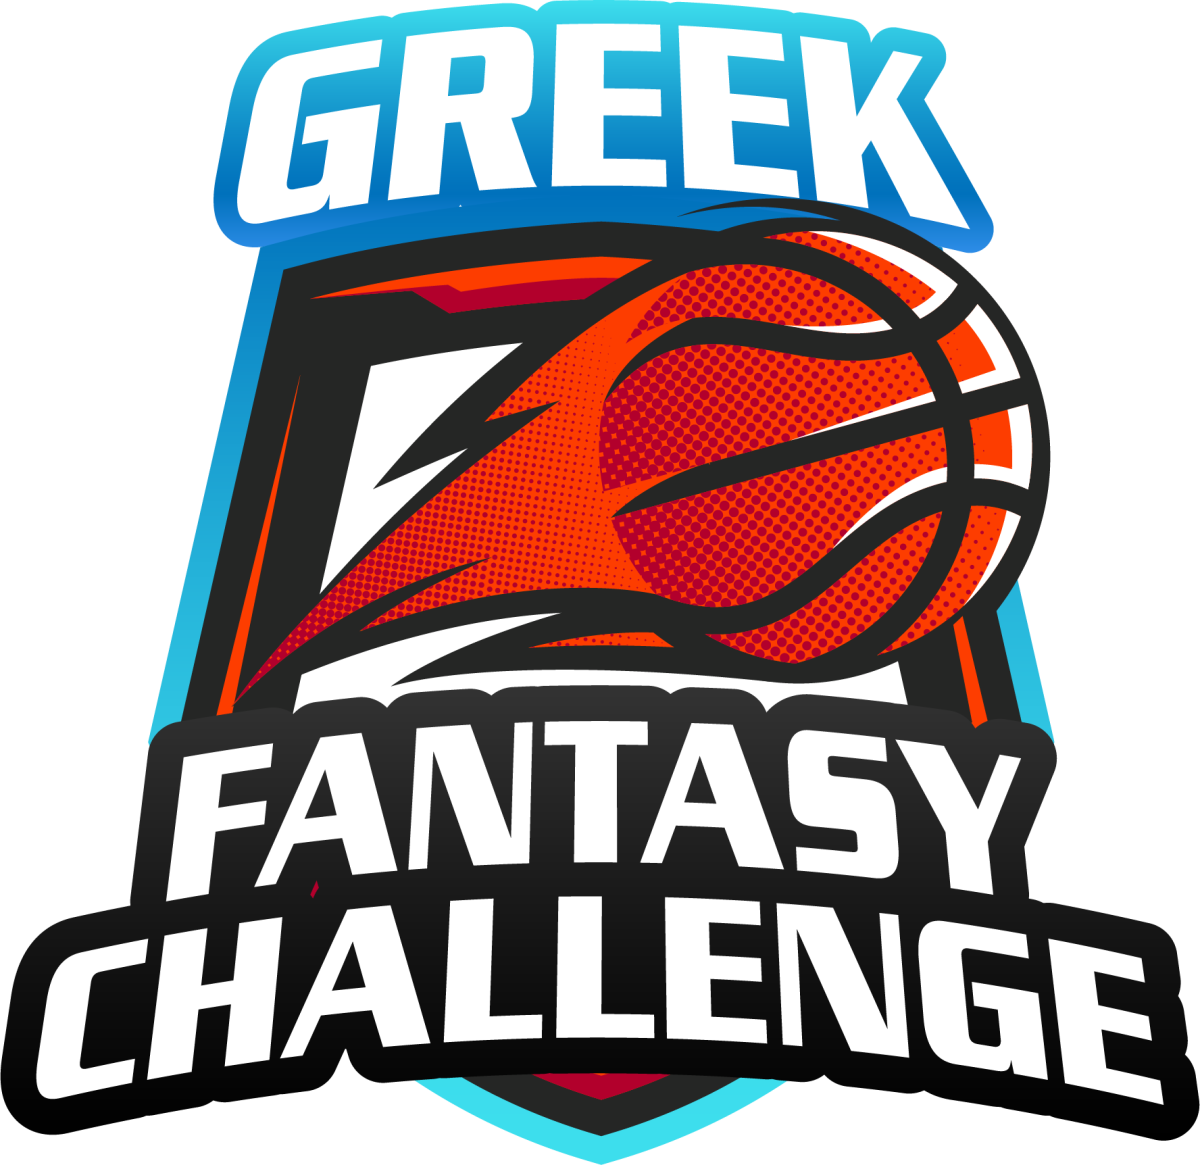 Greek Fantasy Challenge Logo